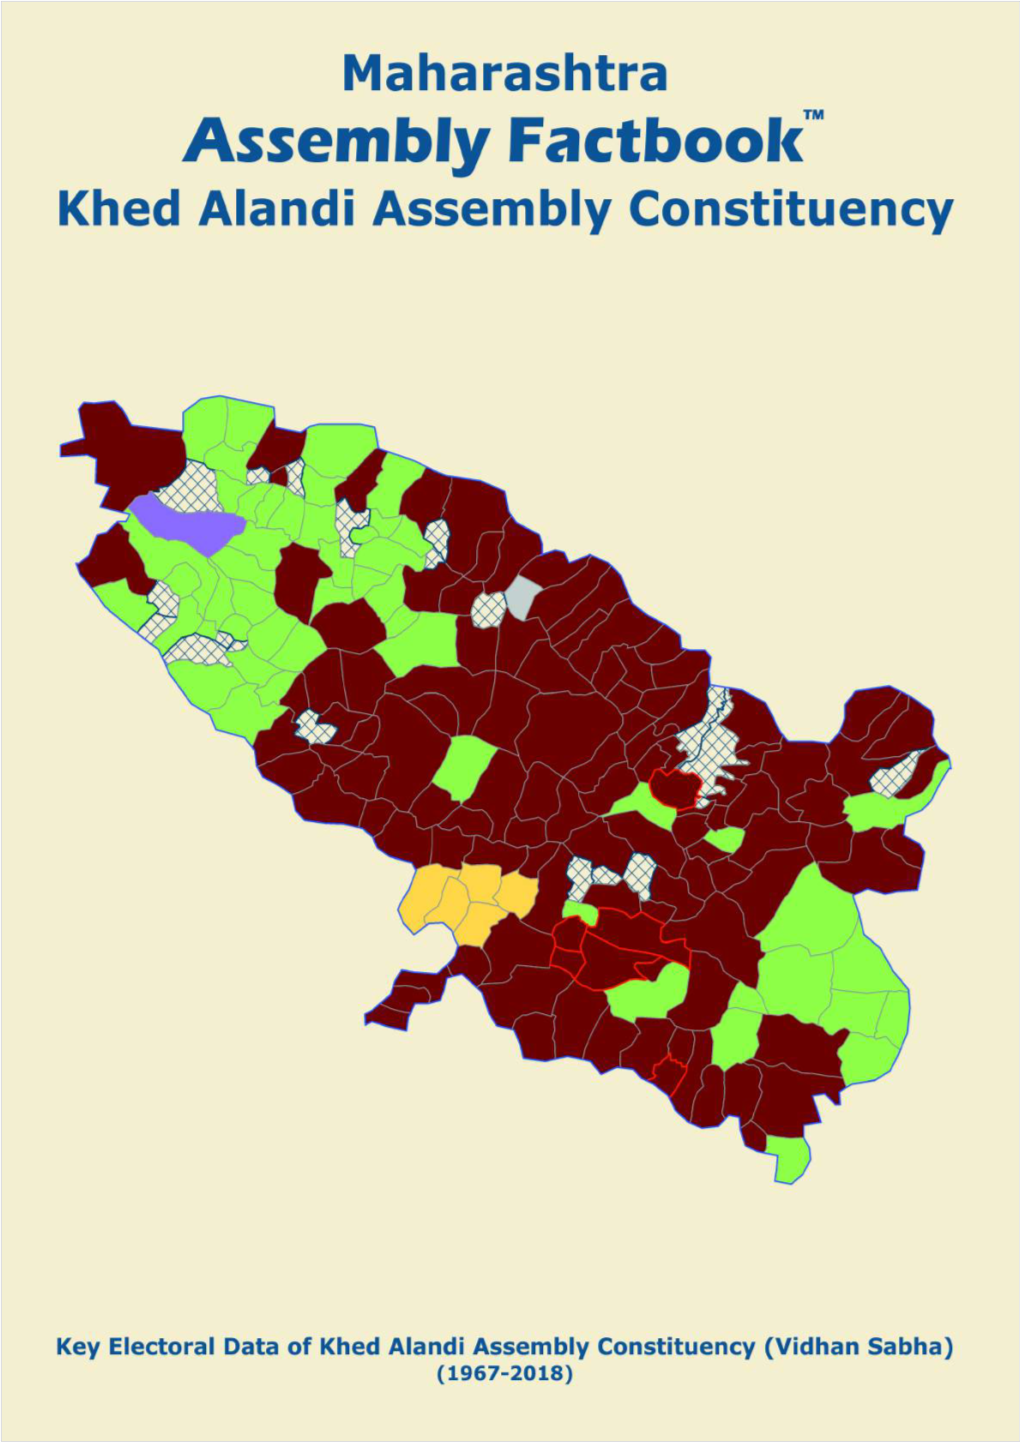 Khed Alandi Assembly Maharashtra Factbook